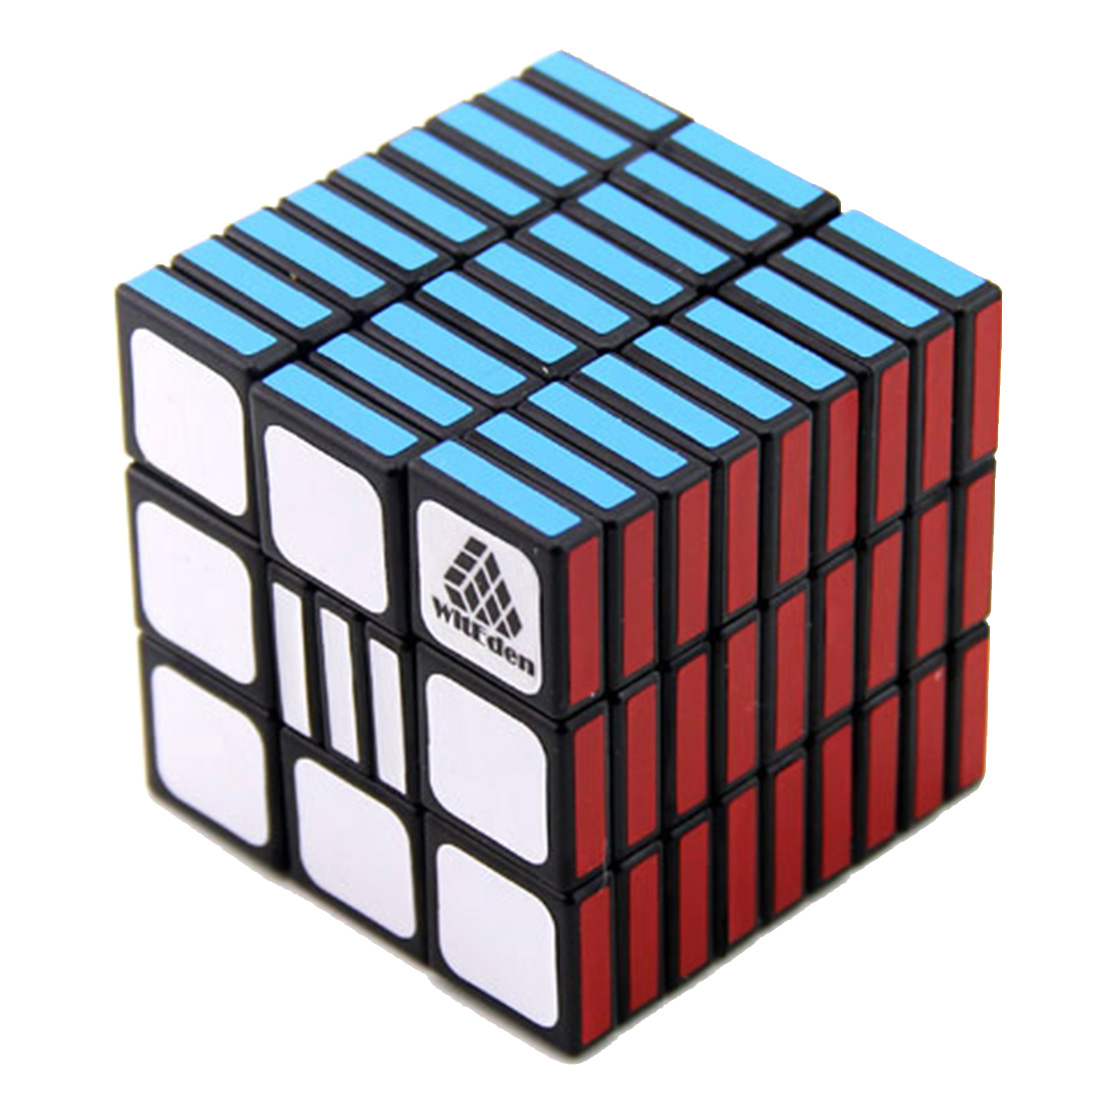 WitEden 3x3x9 Magic Cube (No.2 Edition/Black)